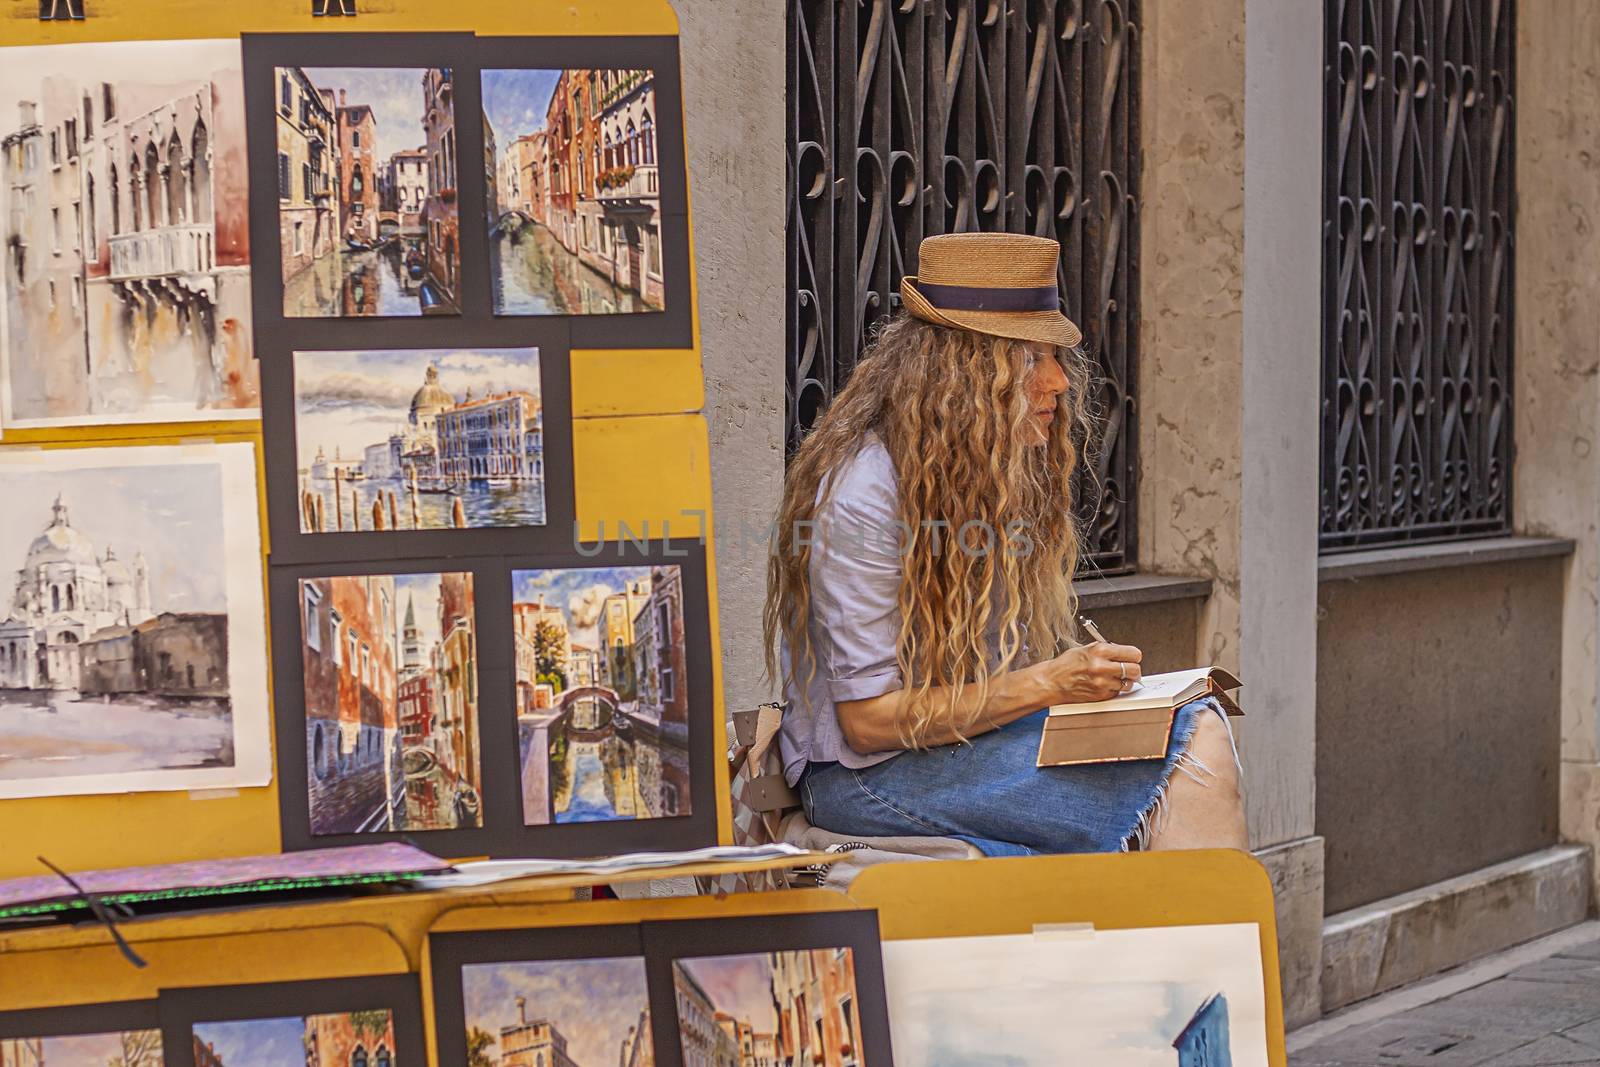 VENICE, ITALY 2 JULY 2020: Street artist painter in Venice